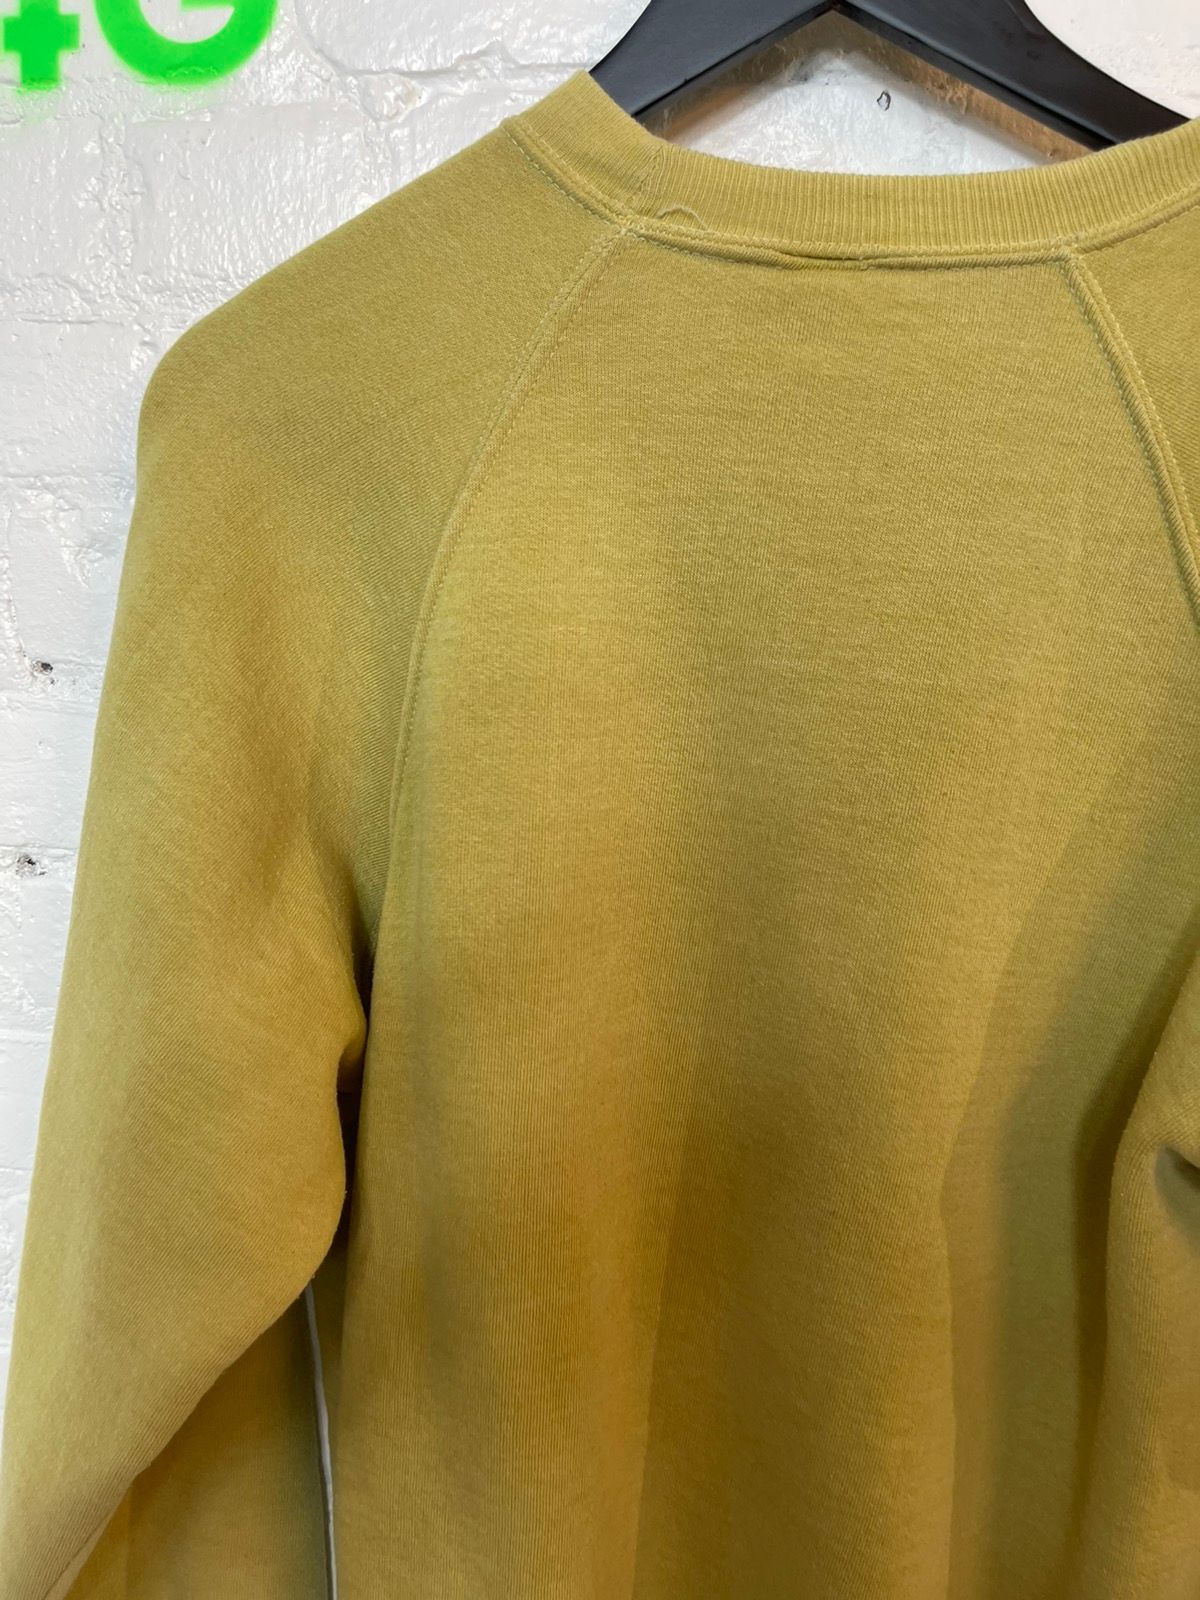 Vintage Puke Green ROCKER FELLER Sweater Crewneck